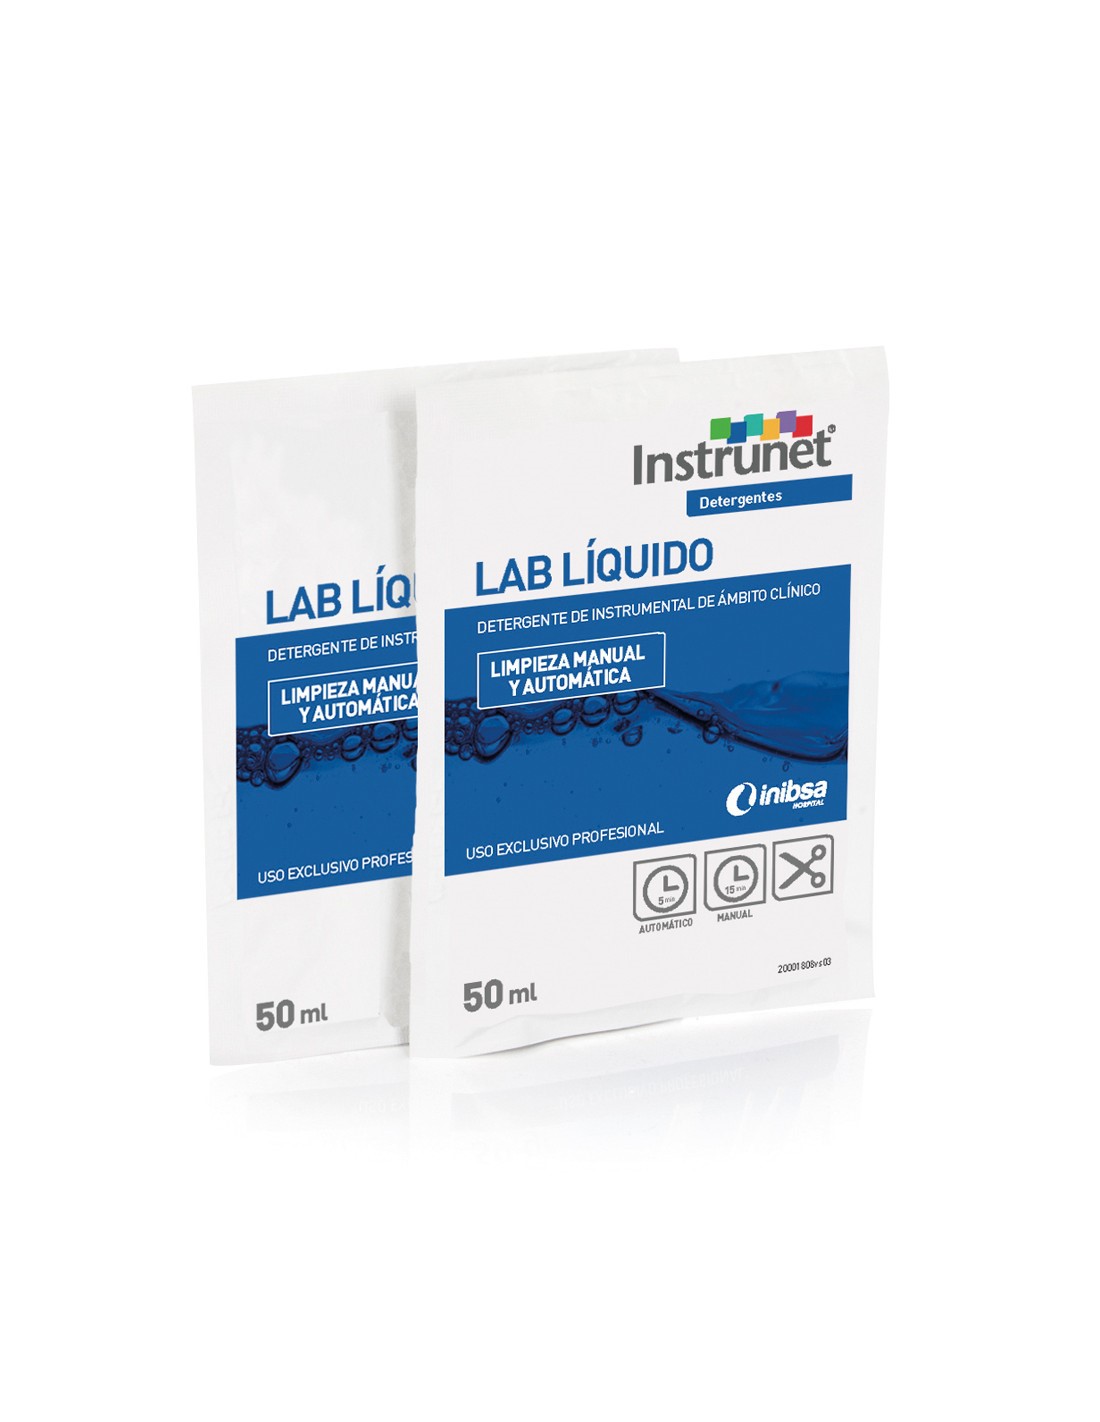 Instrunet Lab Liquido